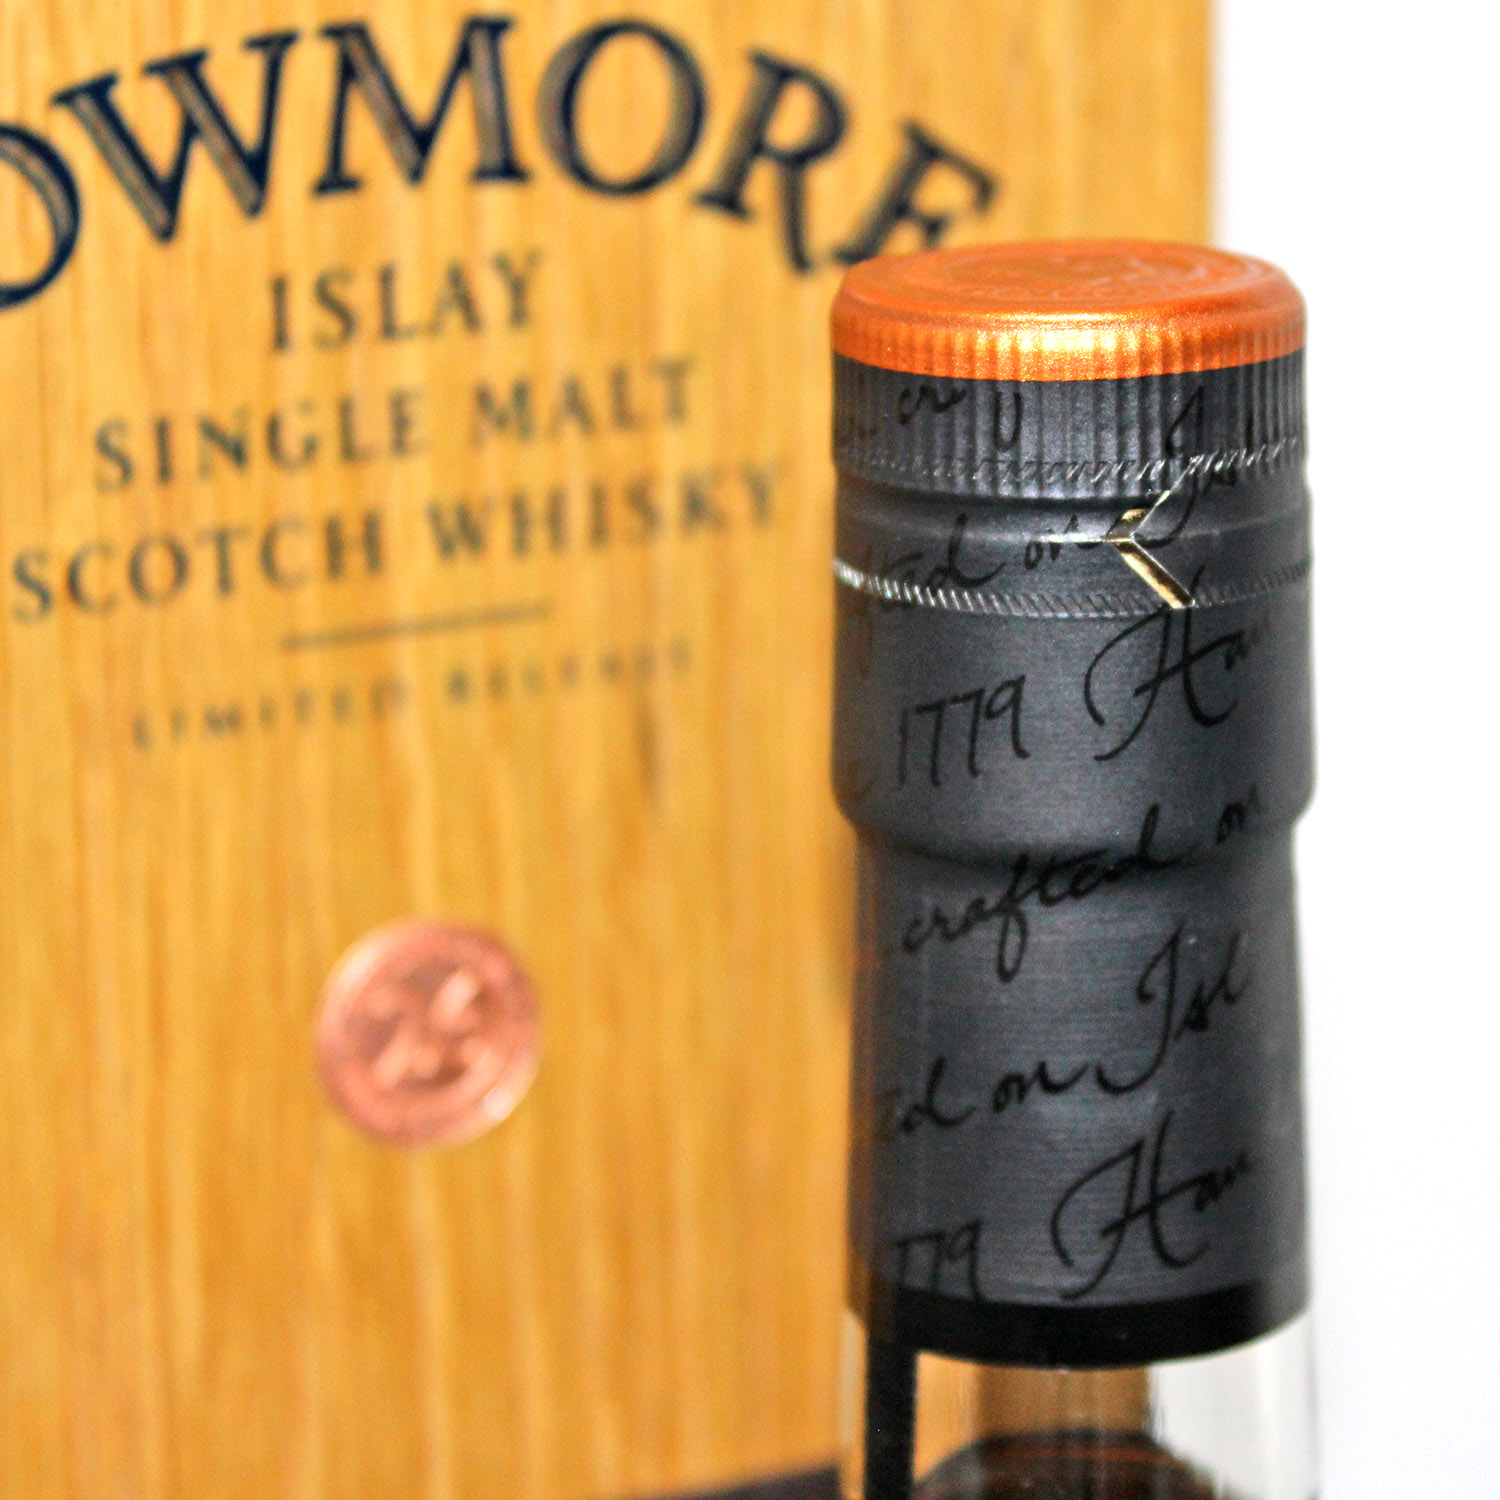 Bowmore 1985 26 Years Single Malt Scotch Whisky Capsule